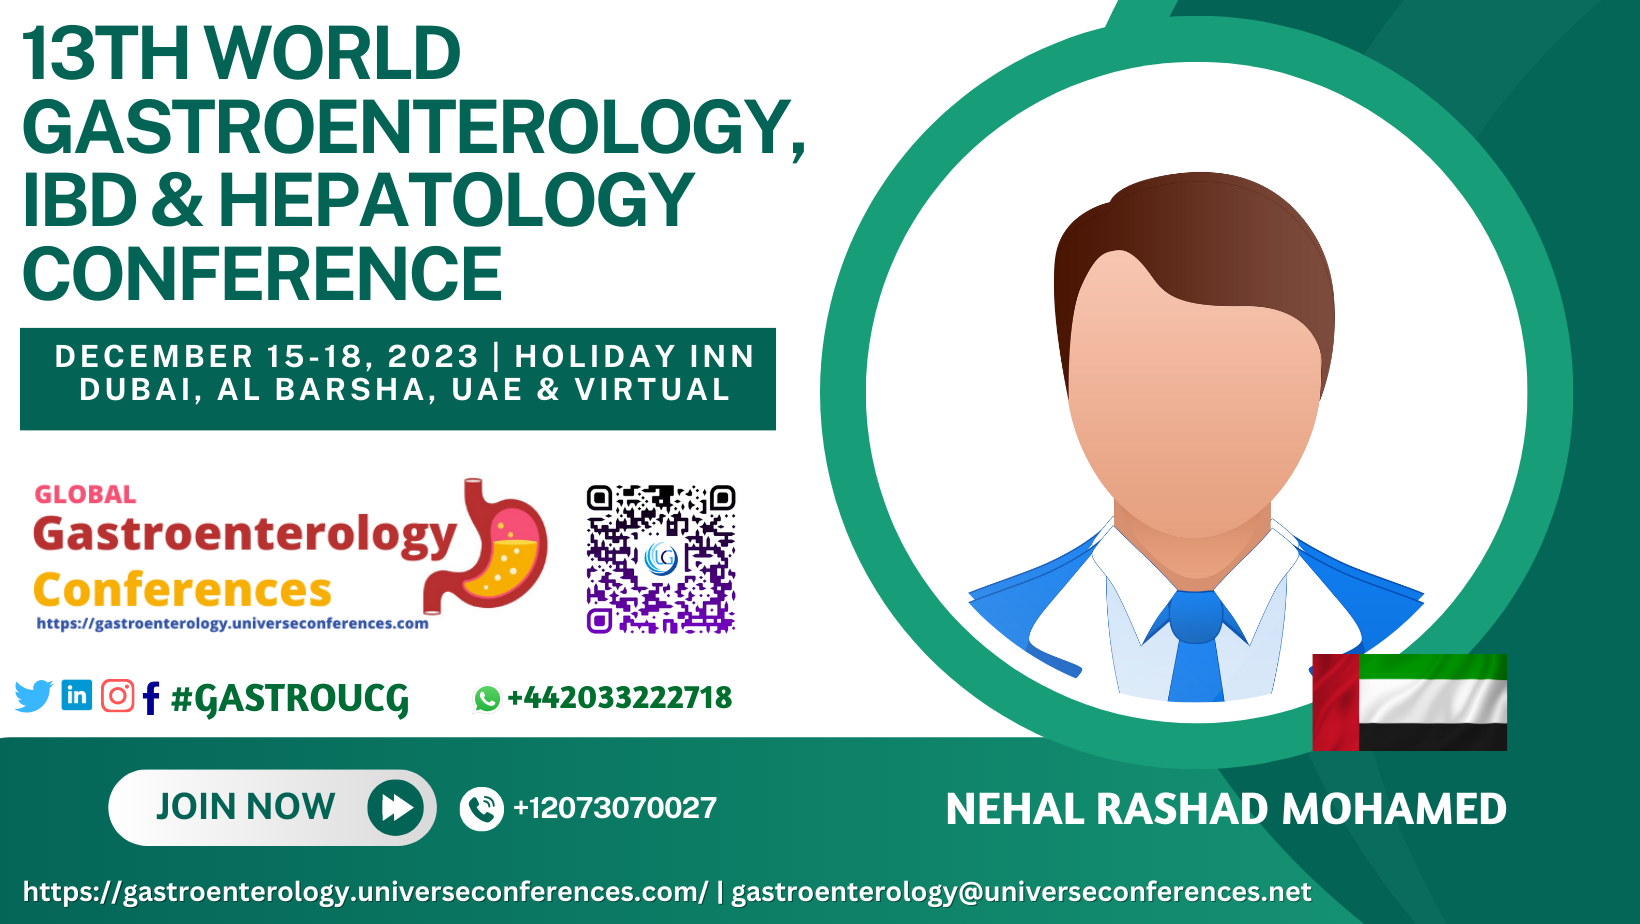 Nehal Rashad Mohamed_13th World Gastroenterology, IBD & Hepatology Conference